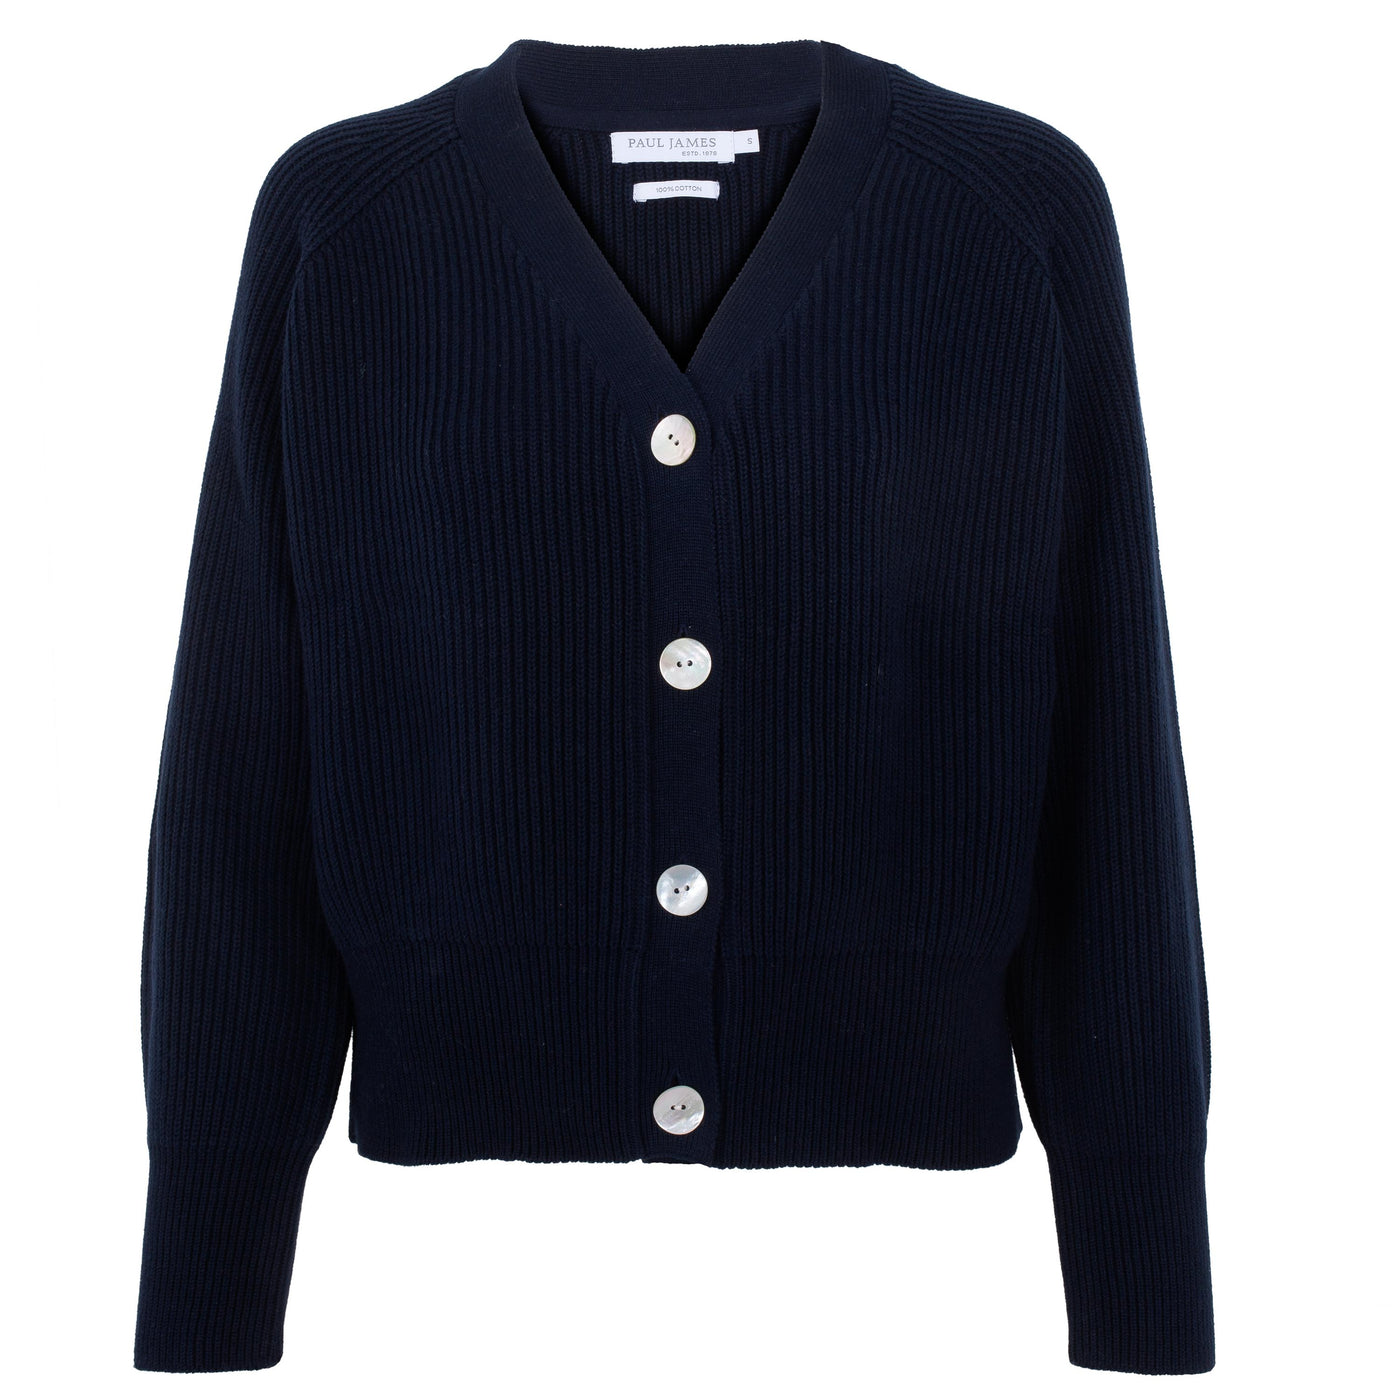 Womens 100% Cotton Oversized V Neck Ribbed Cardigan – Paul James Knitwear